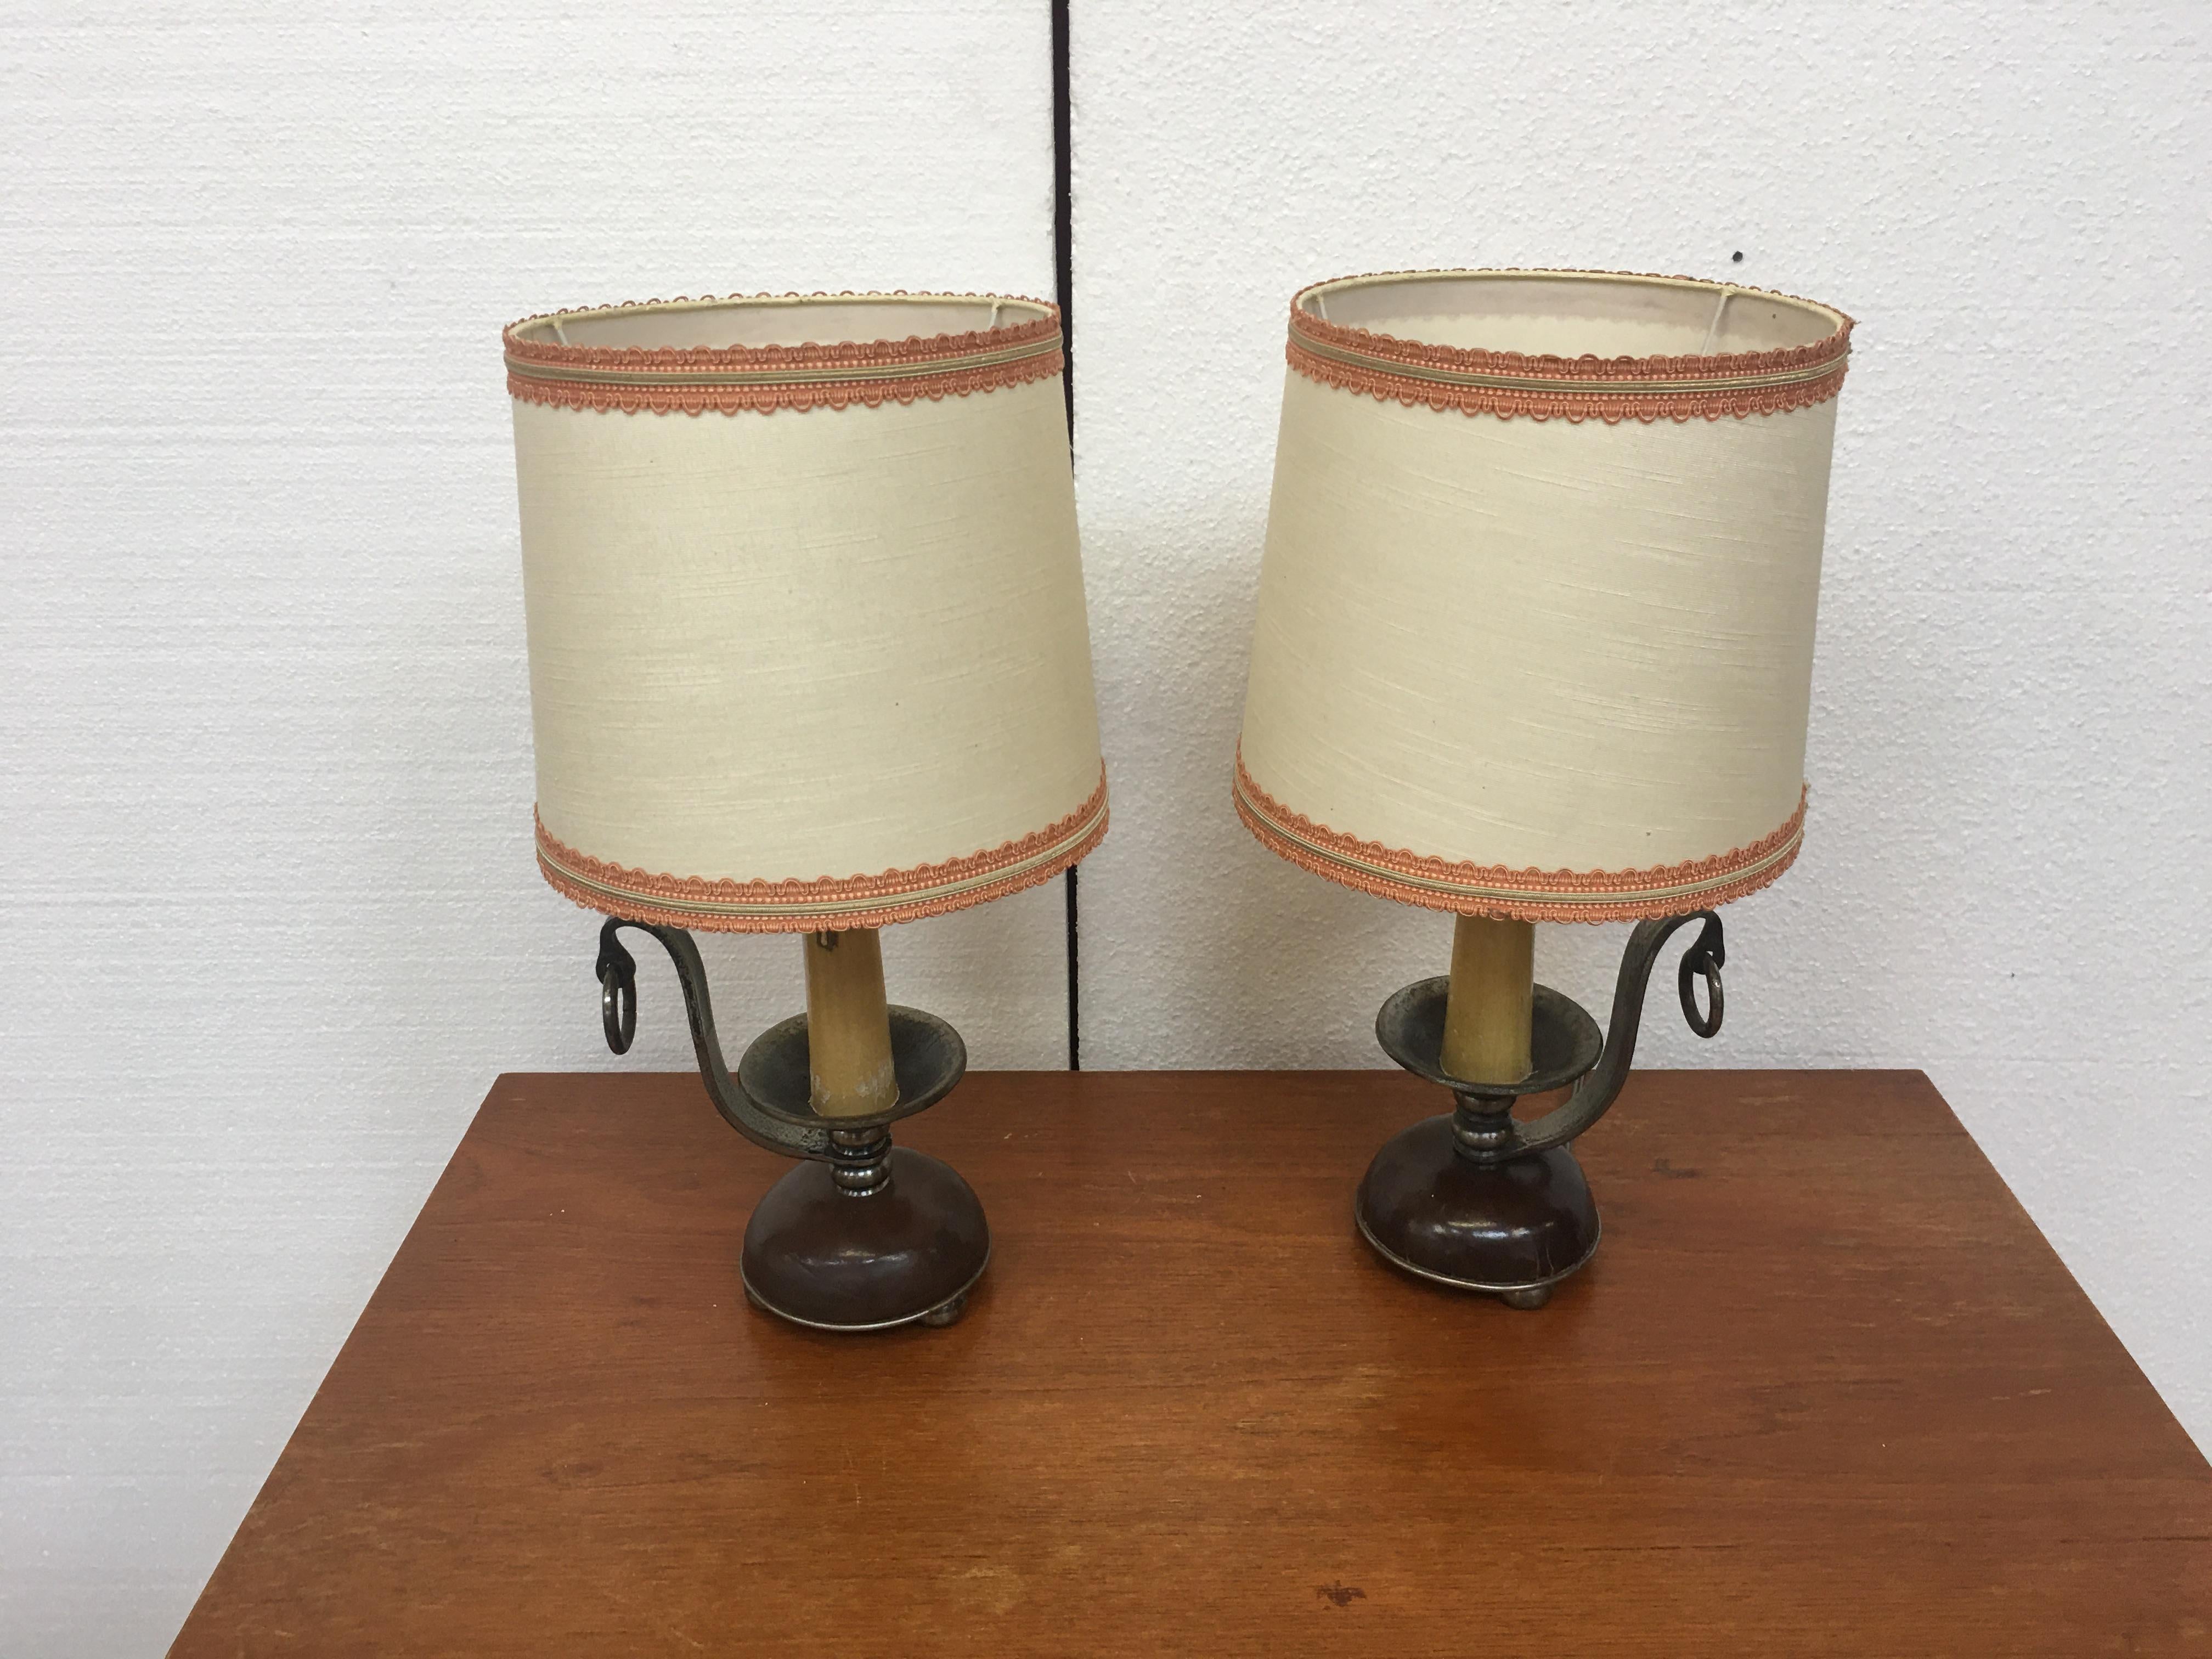 2 original wrought iron lamps circa 1950/1960
lampshade in good condition.